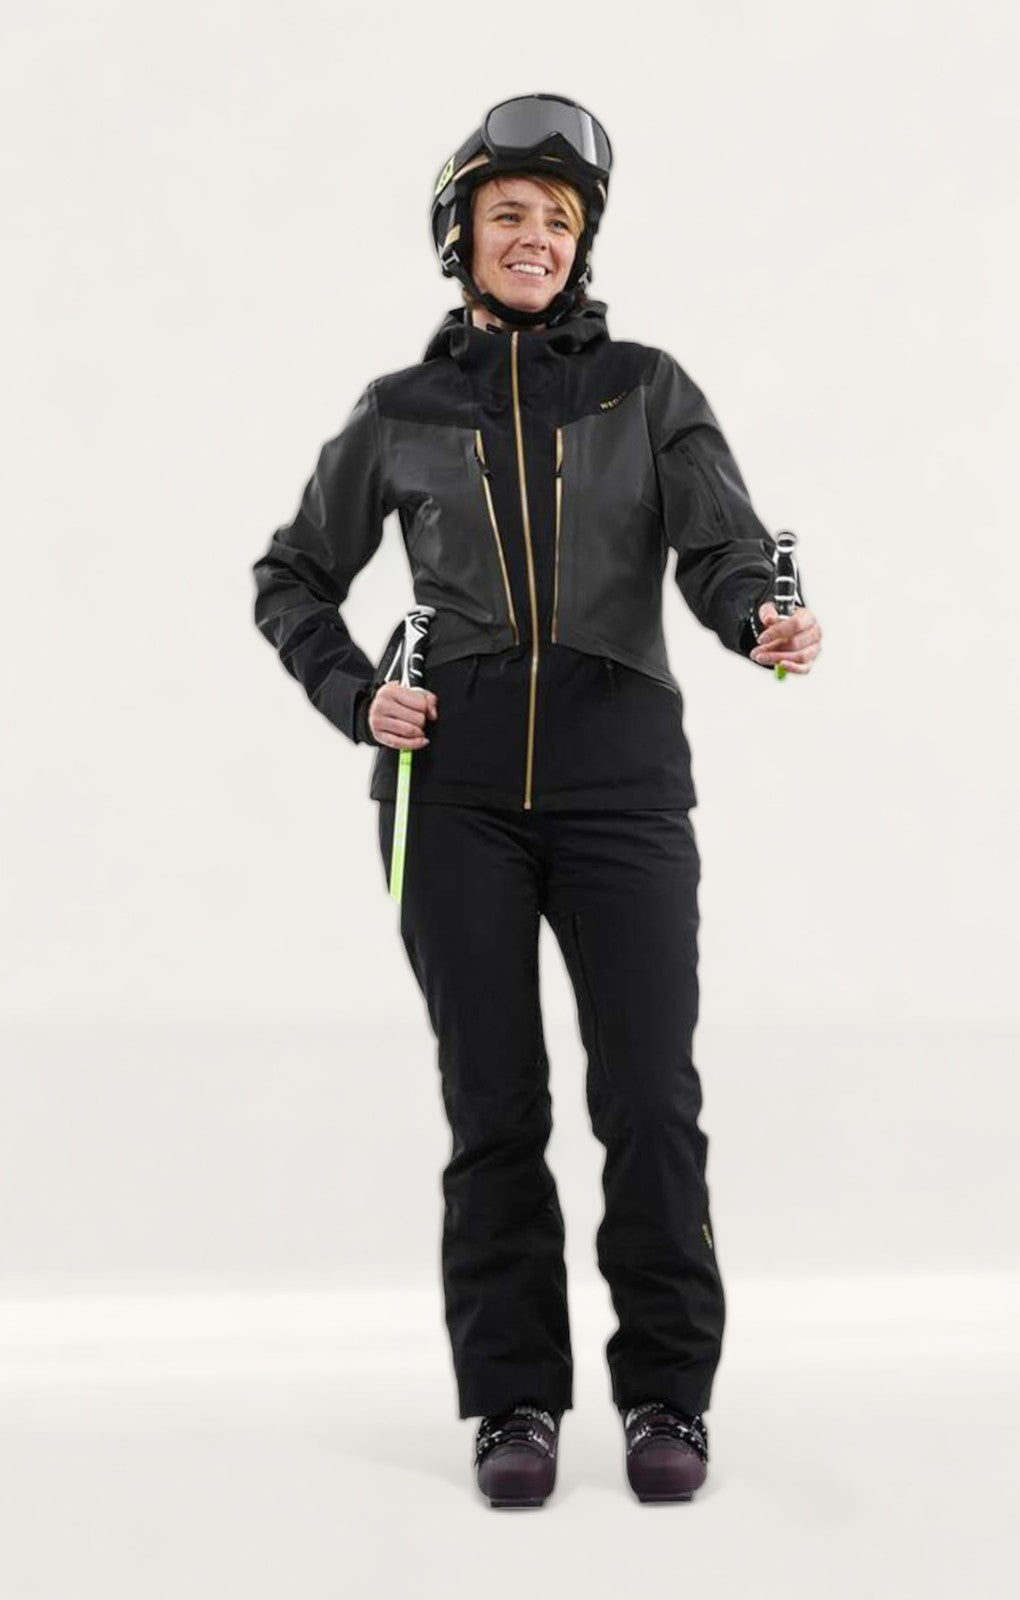 Decathlon Black Women's Downhill Ski Jacket & Liner product image